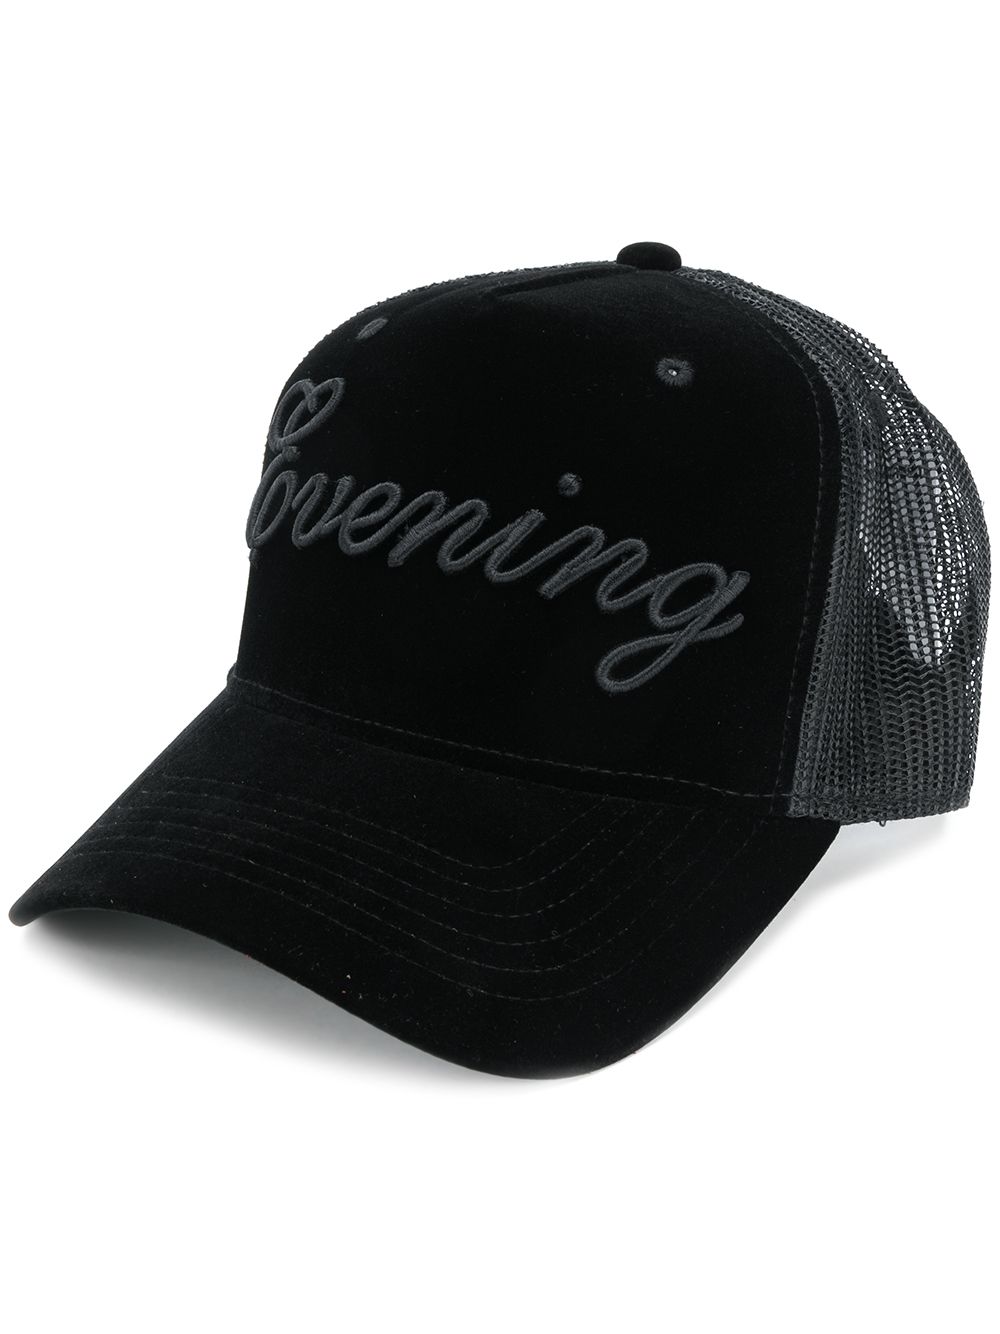 Dsquared2 Evening cap $190 - Buy Online 